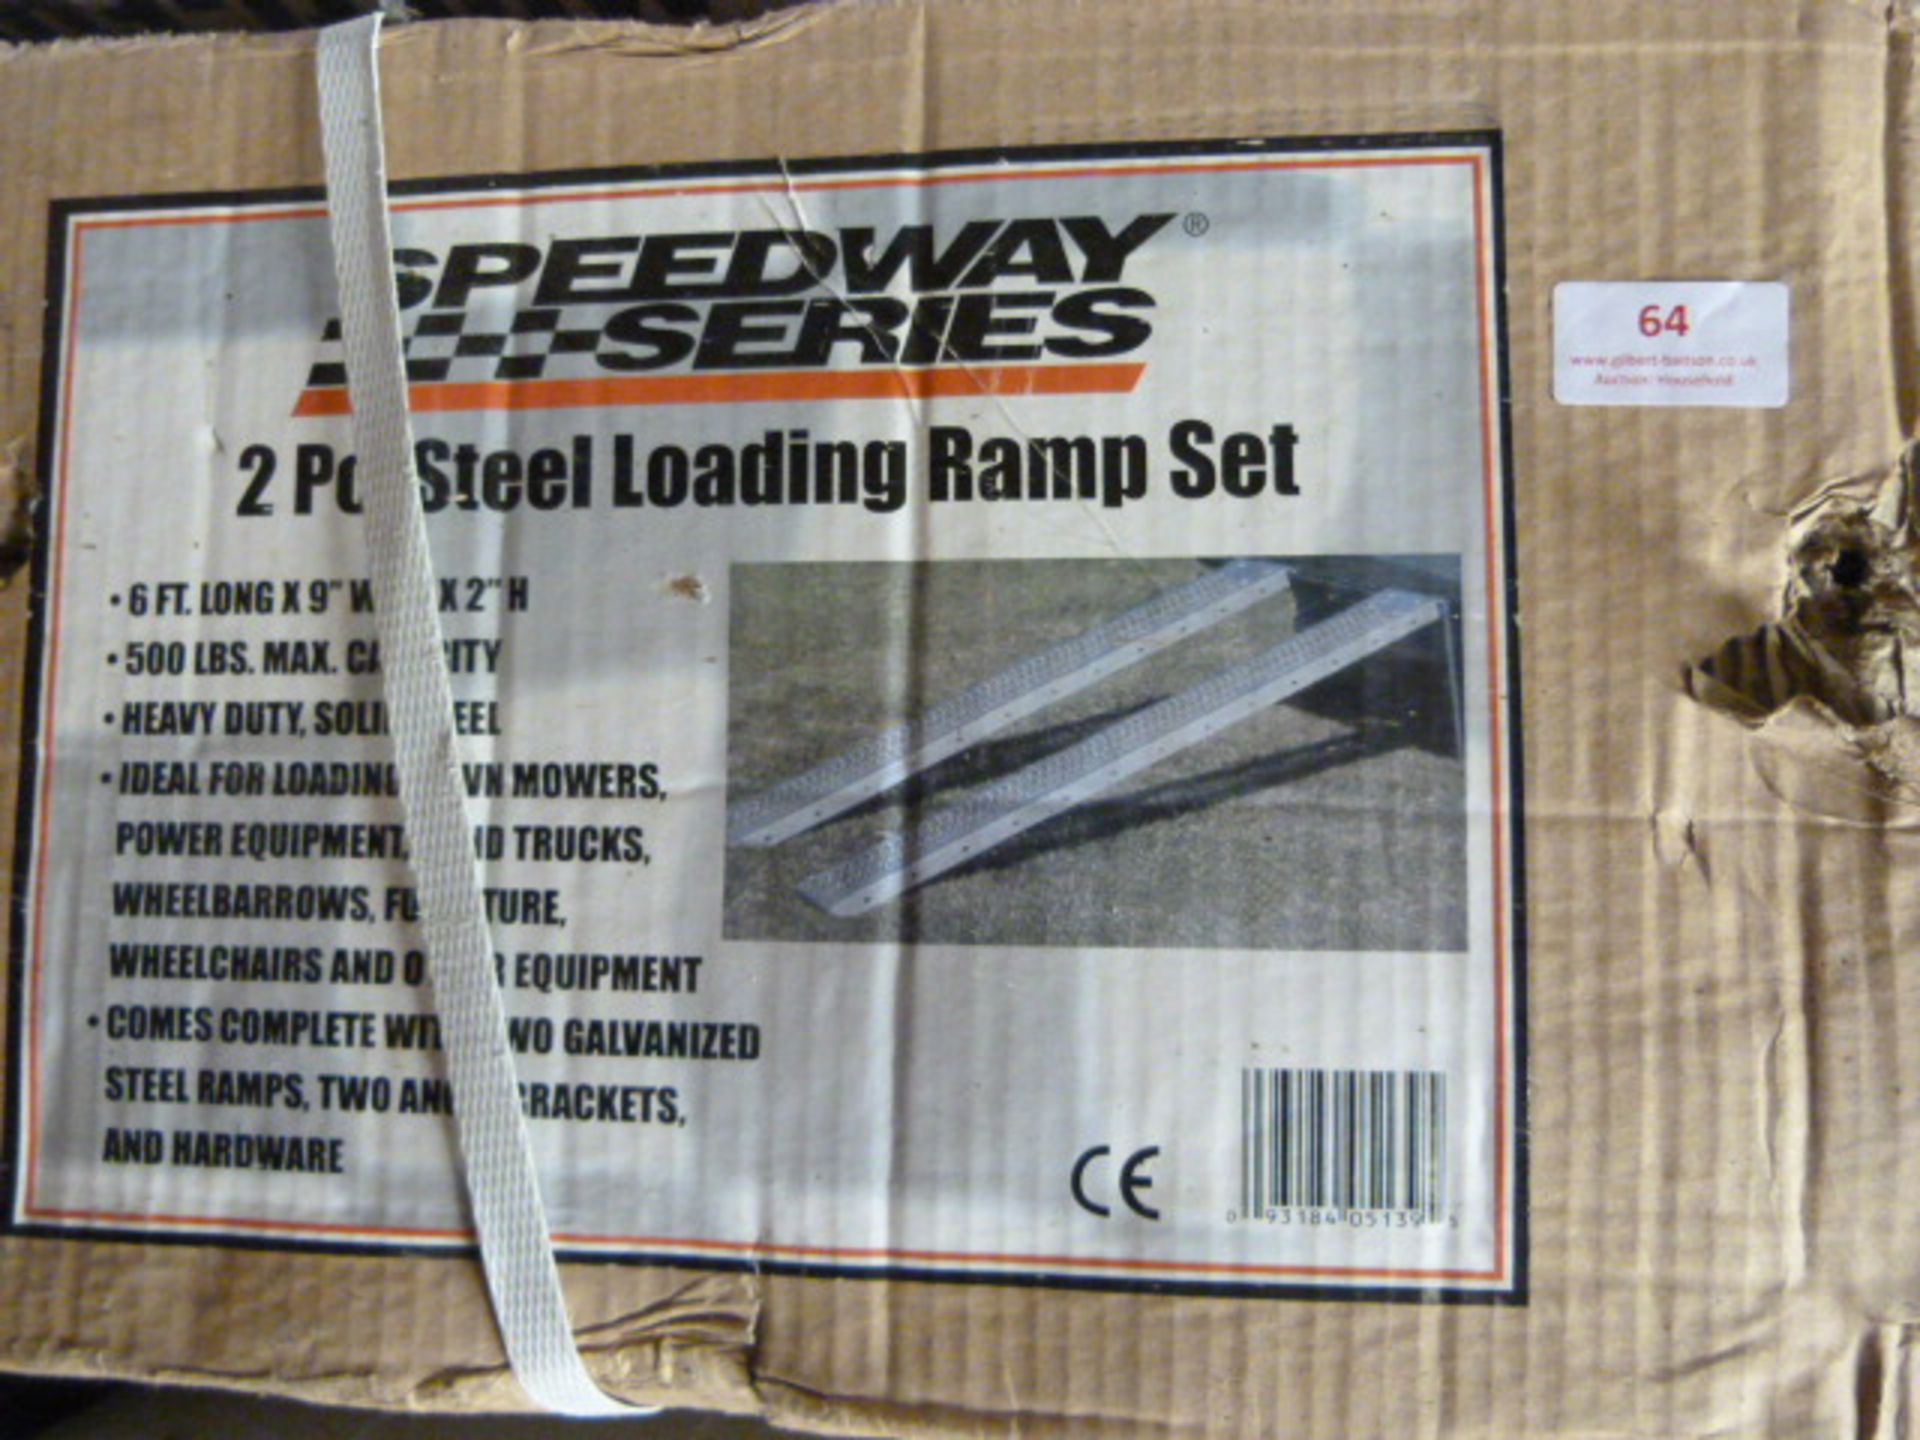 Speedway Series Two Piece Steel Loading Ramp